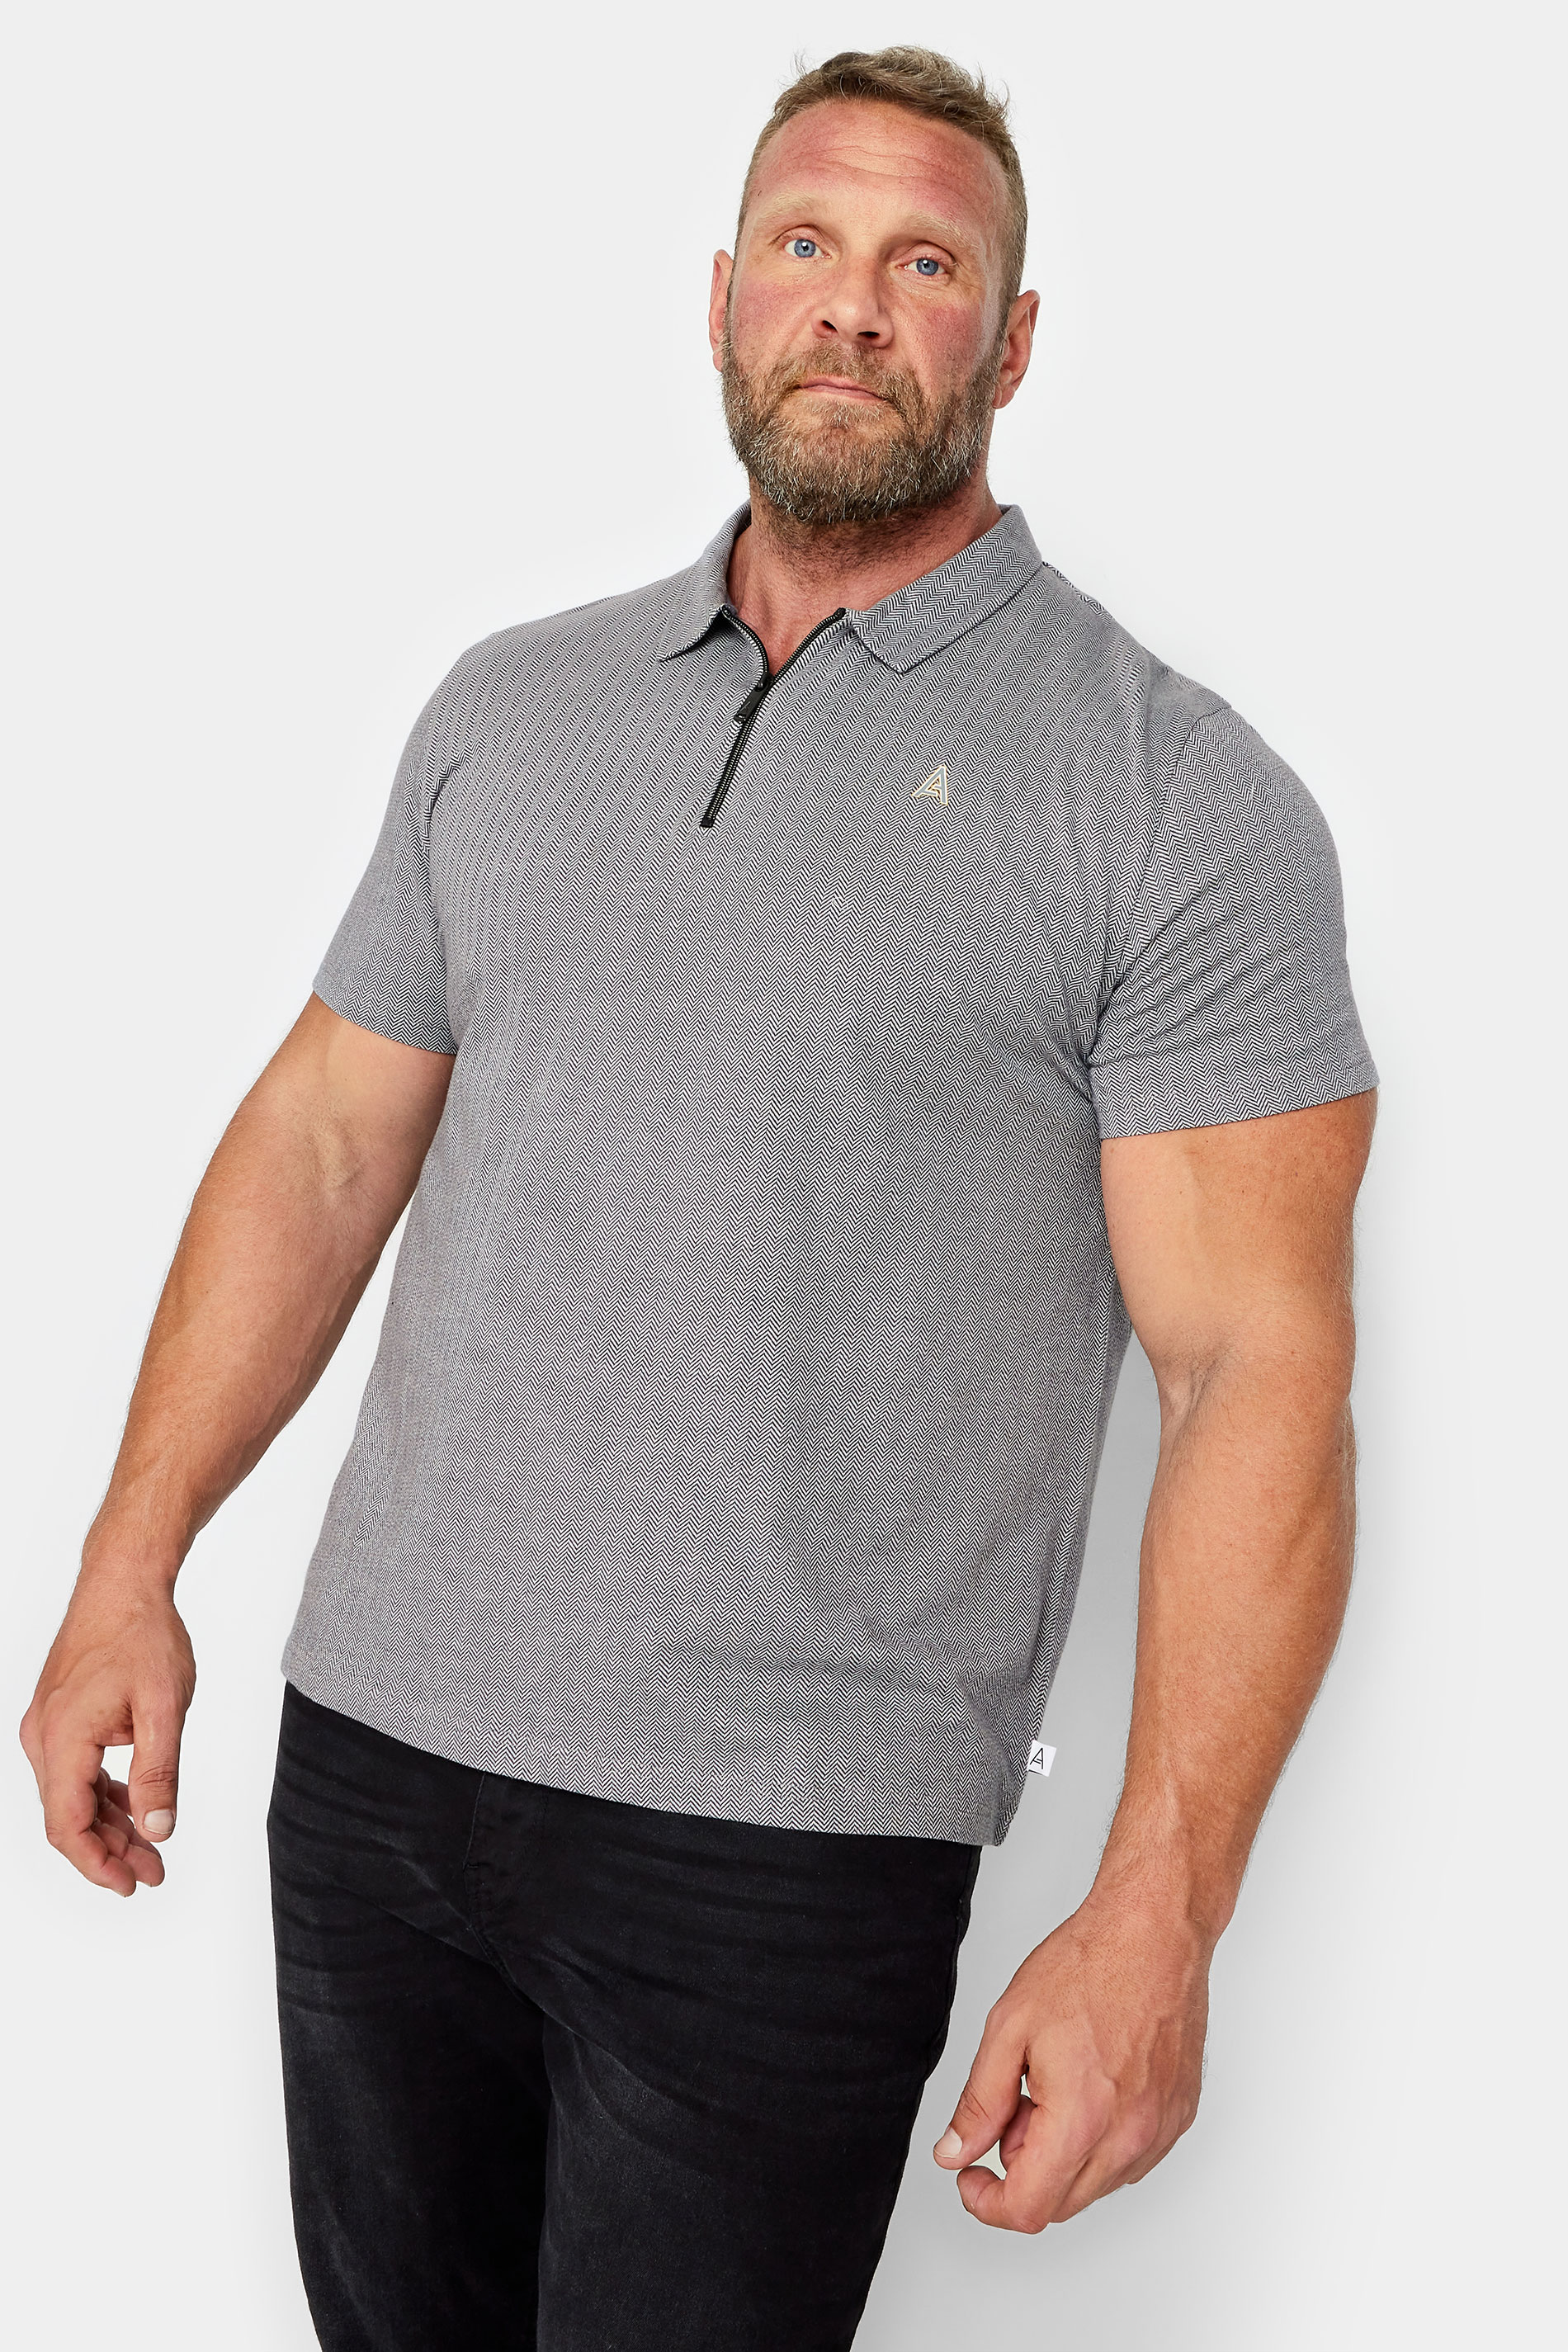 STUDIO A Big & Tall Grey Zip Neck Polo Shirt 1